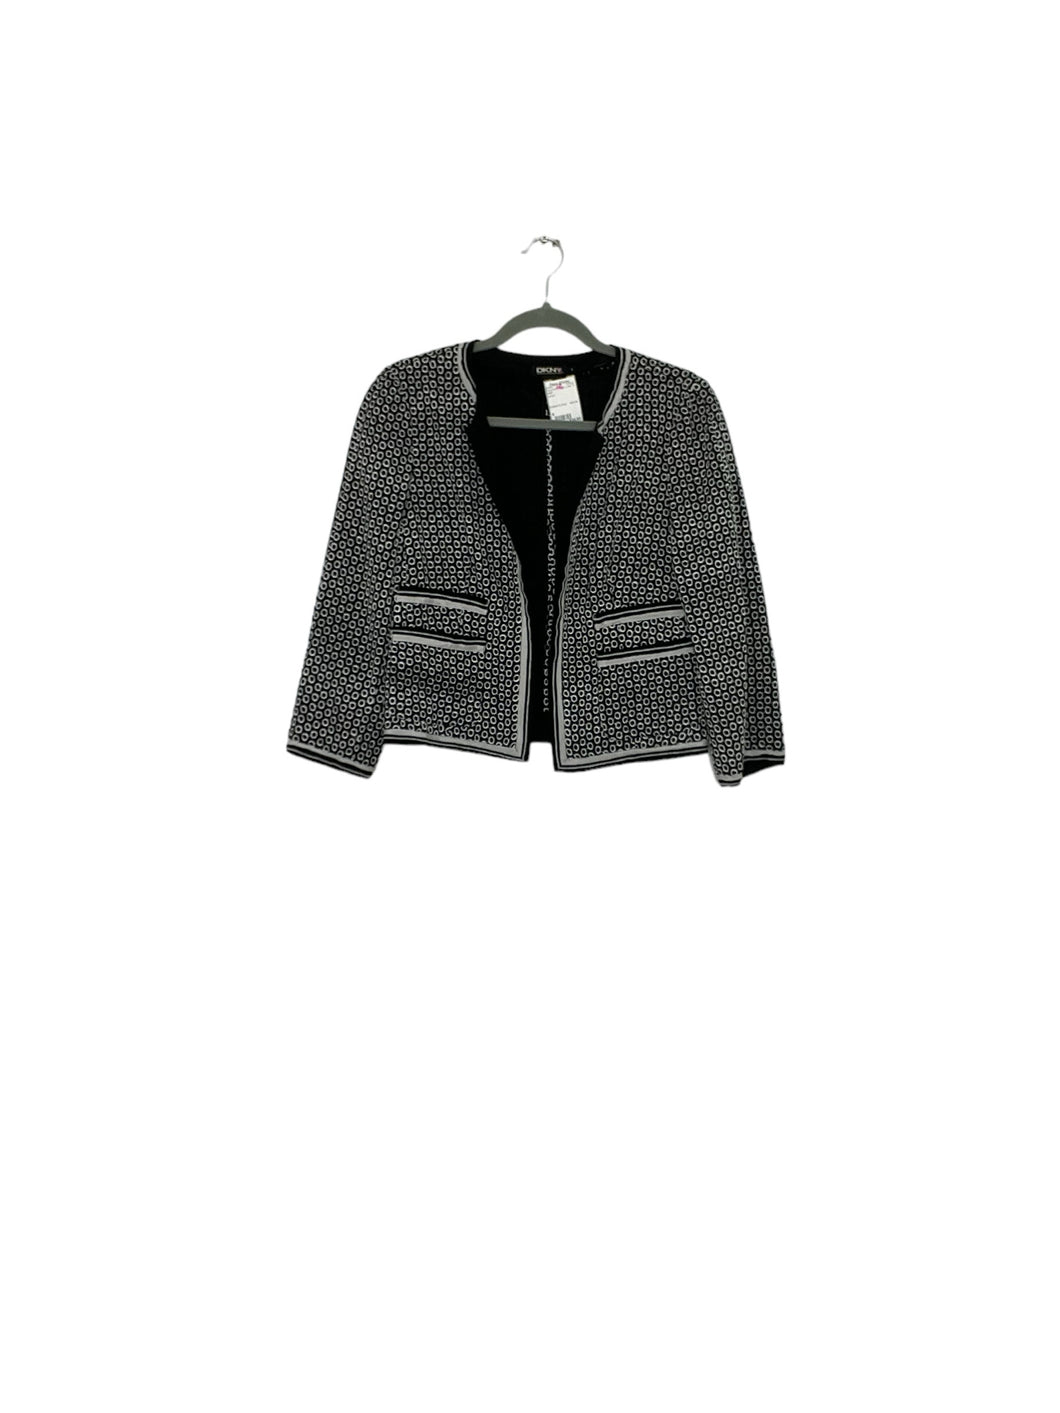 DKNY Size 8 Blk/Wht Blazer/Indoor Jacket- Ladies